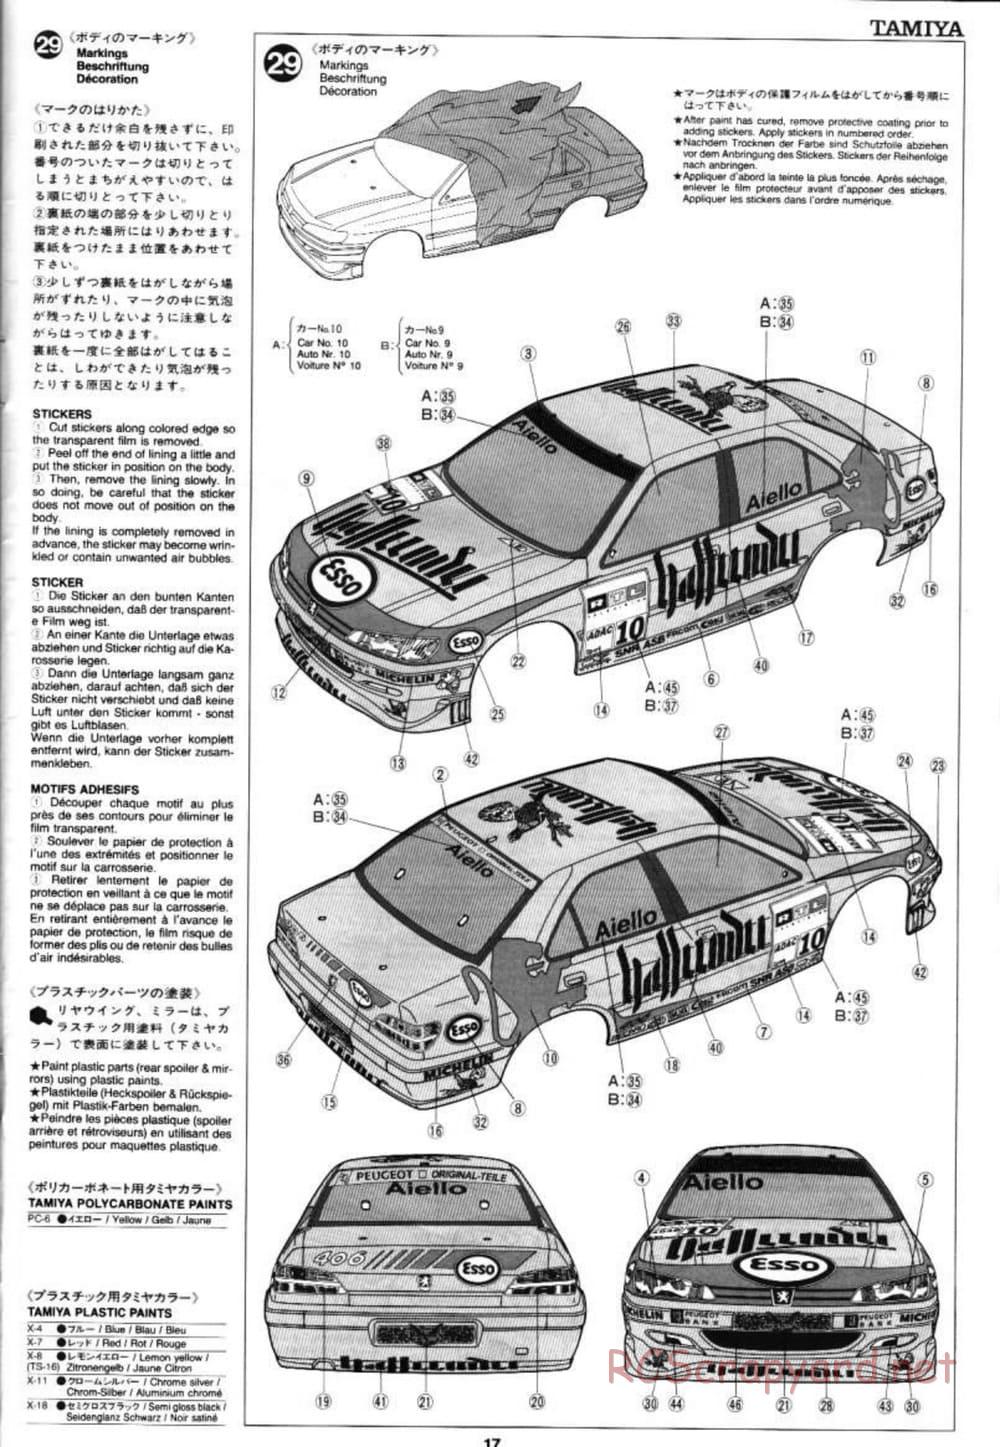 Tamiya - Peugeot 406 ST - TL-01 Chassis - Manual - Page 17